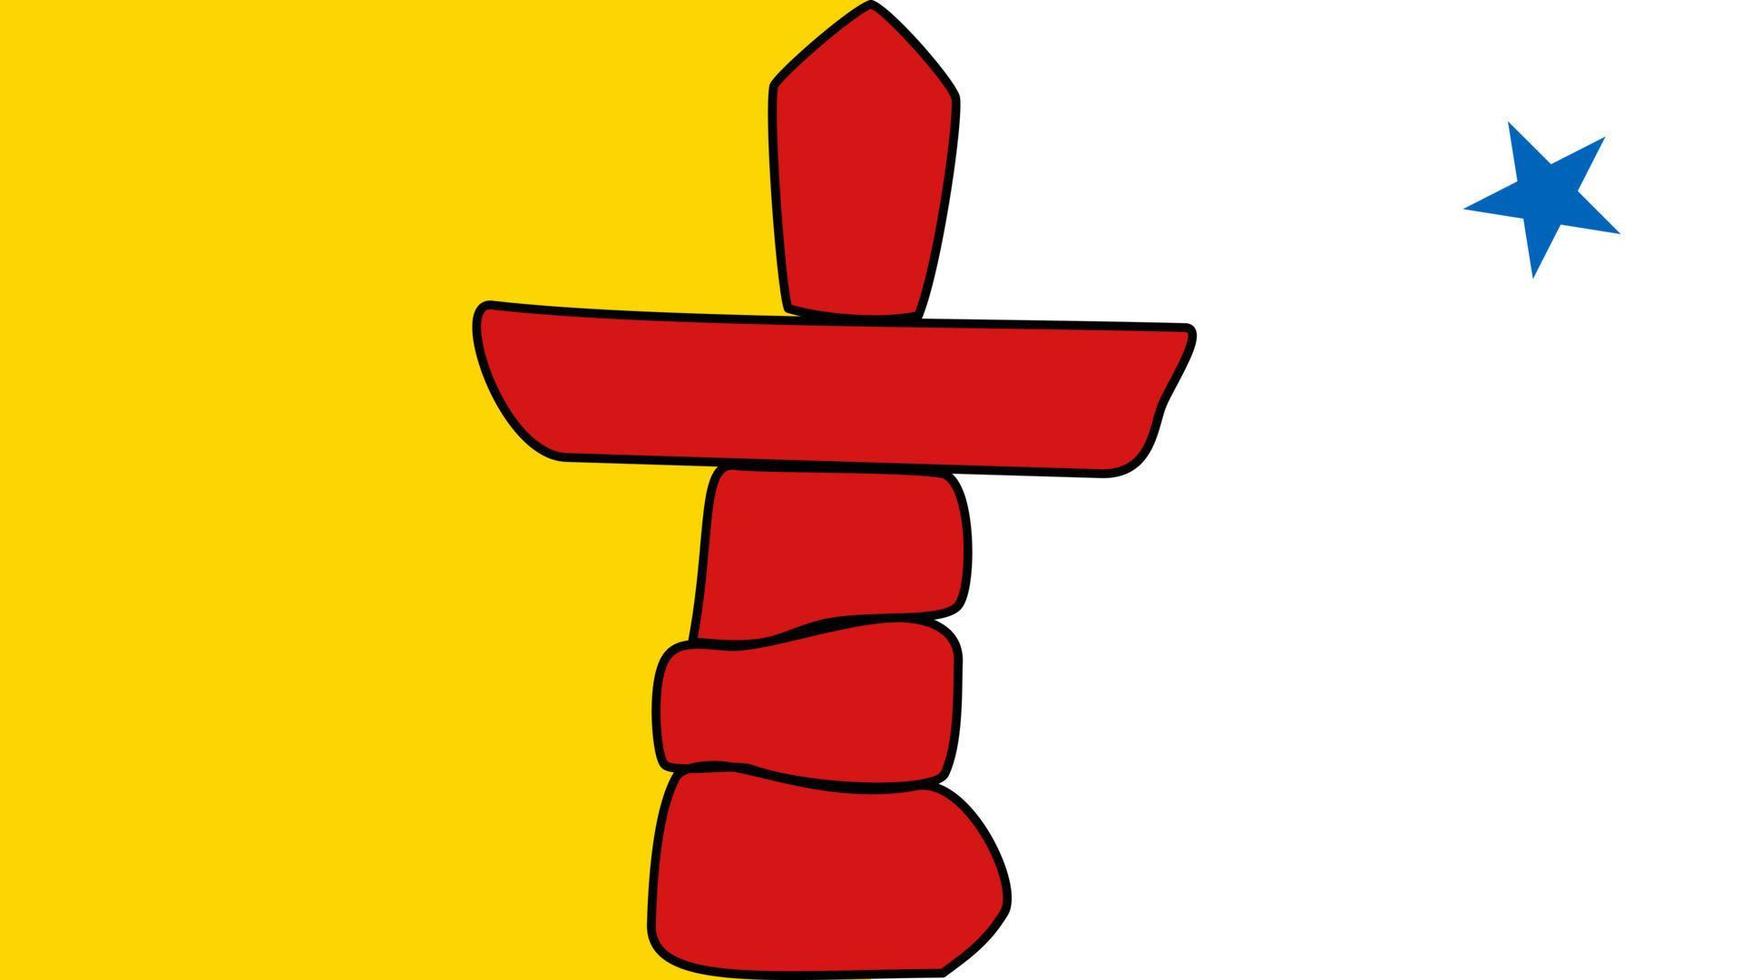 Nunavut-Flagge, Provinz Kanada. Vektor-Illustration. vektor